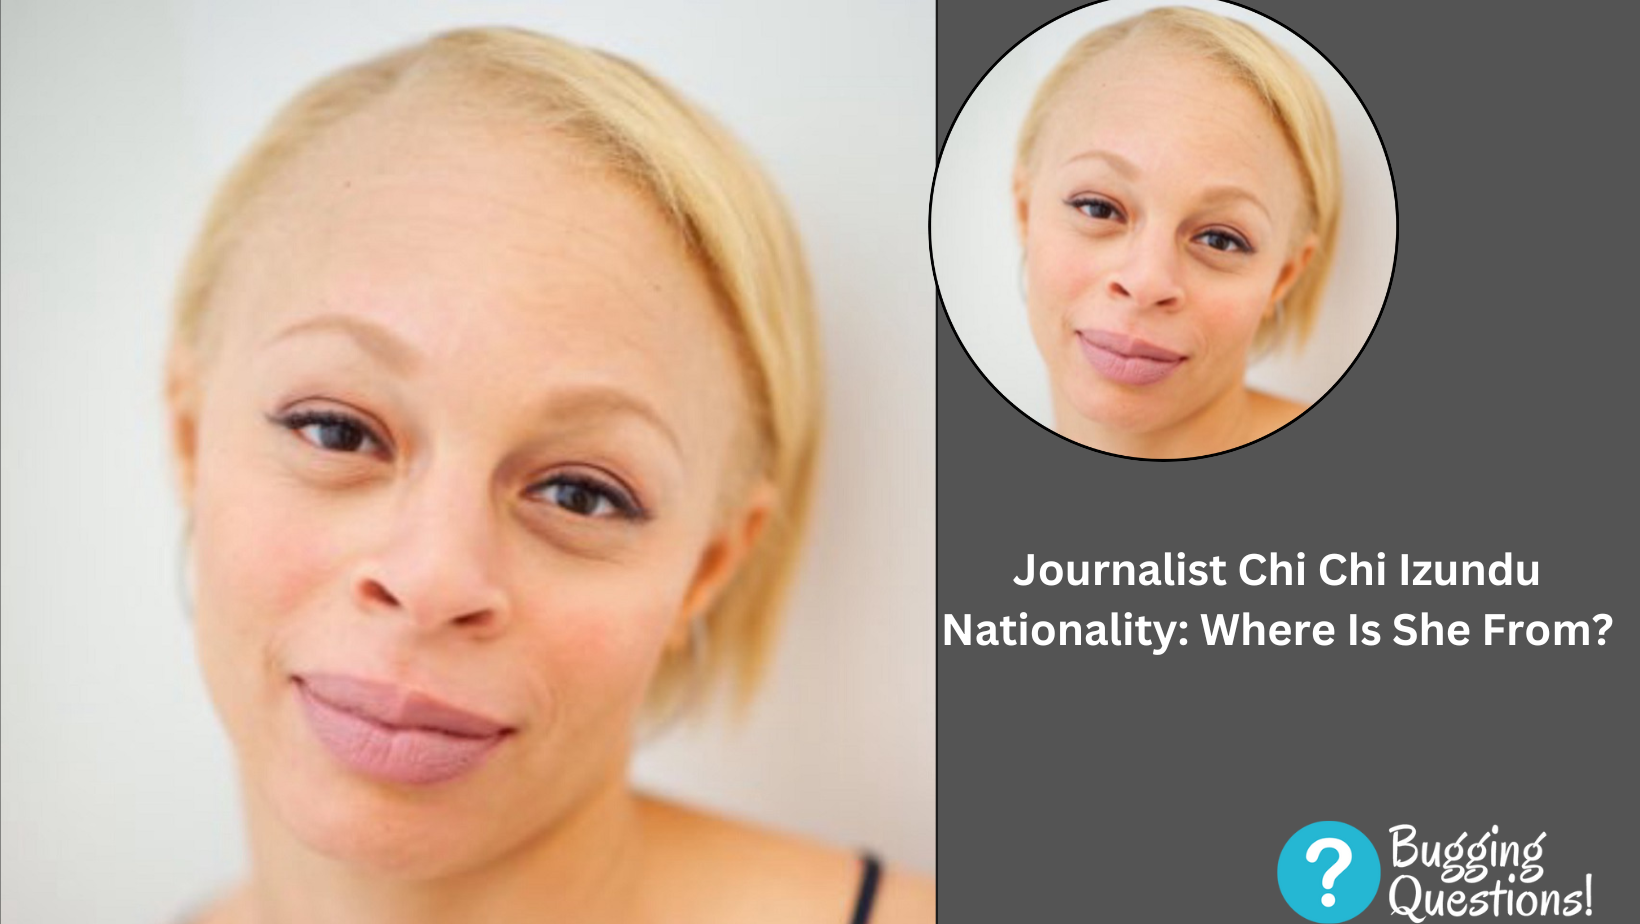 Journalist Chi Chi Izundu Nationality: Where Is She From?